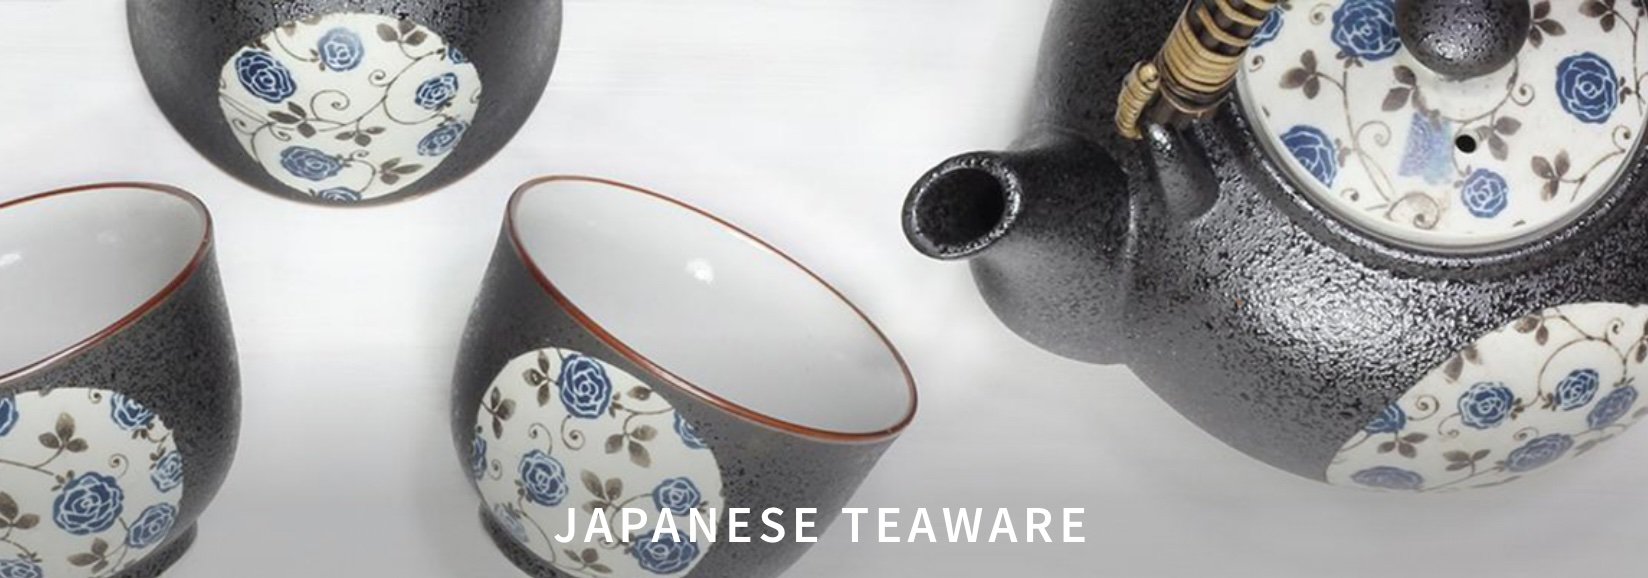 Japanese Teaware